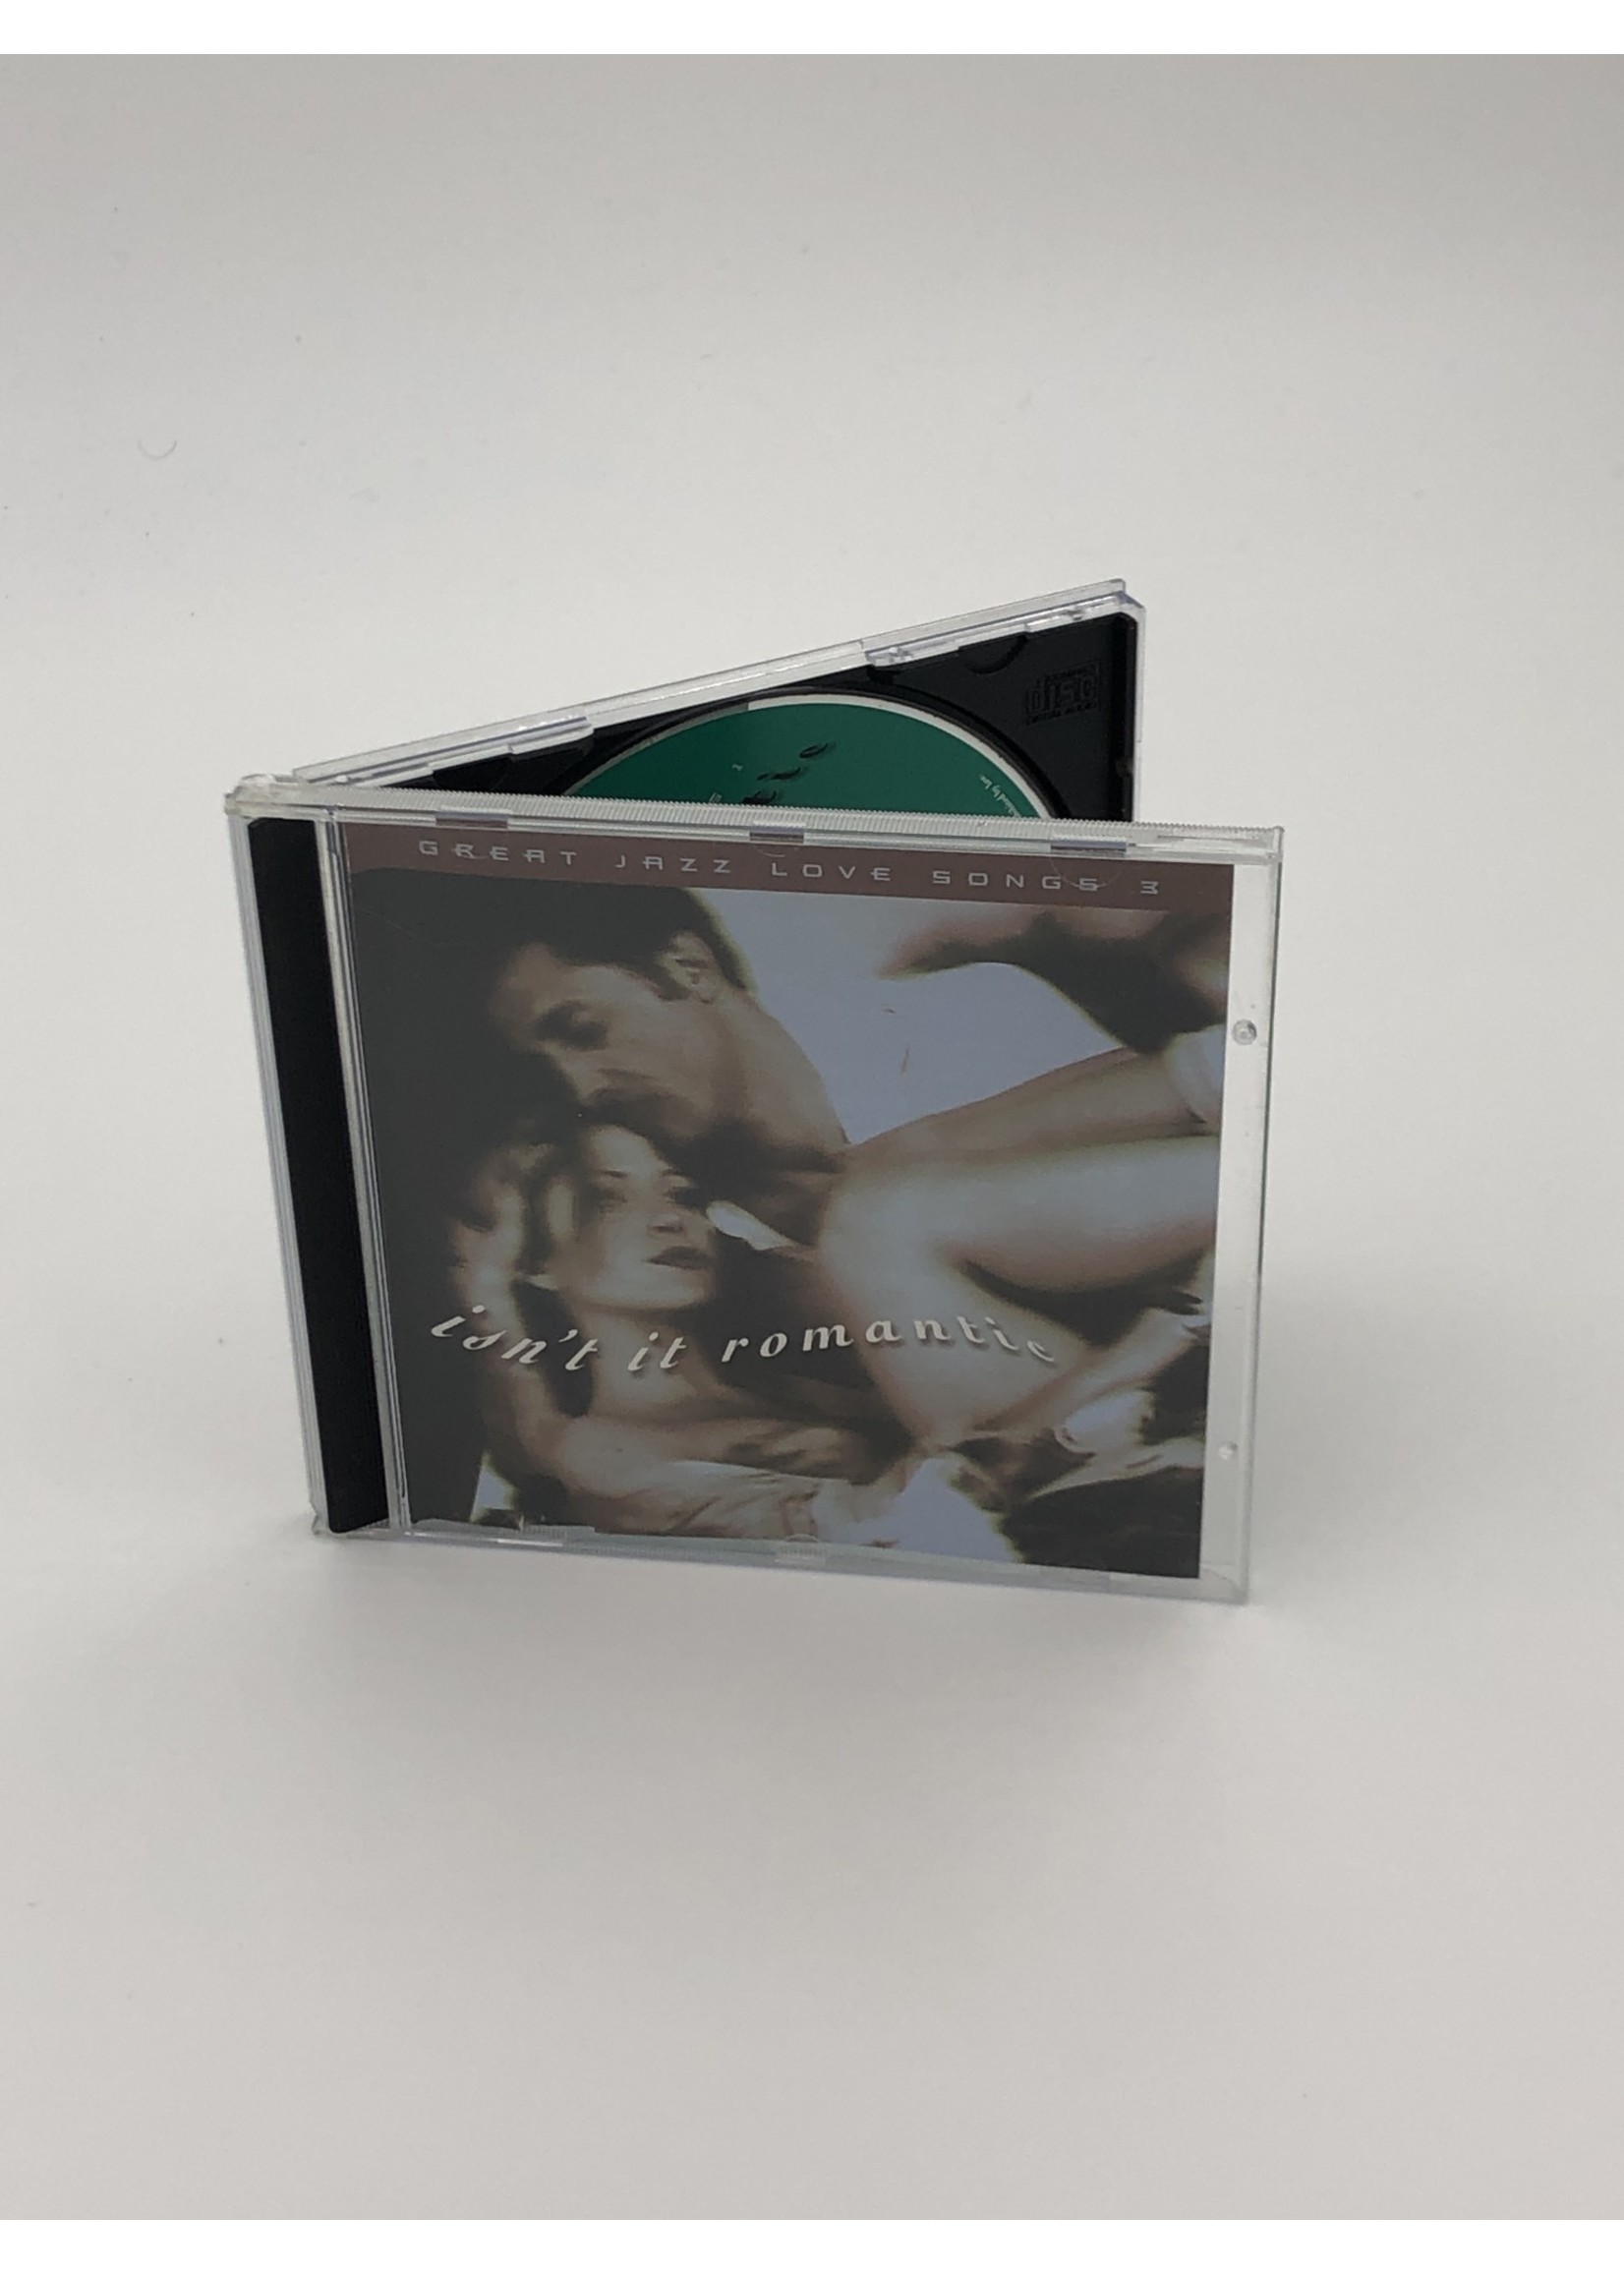 CD Great Jazz Love Songs 3: Isnt It Romantic CD